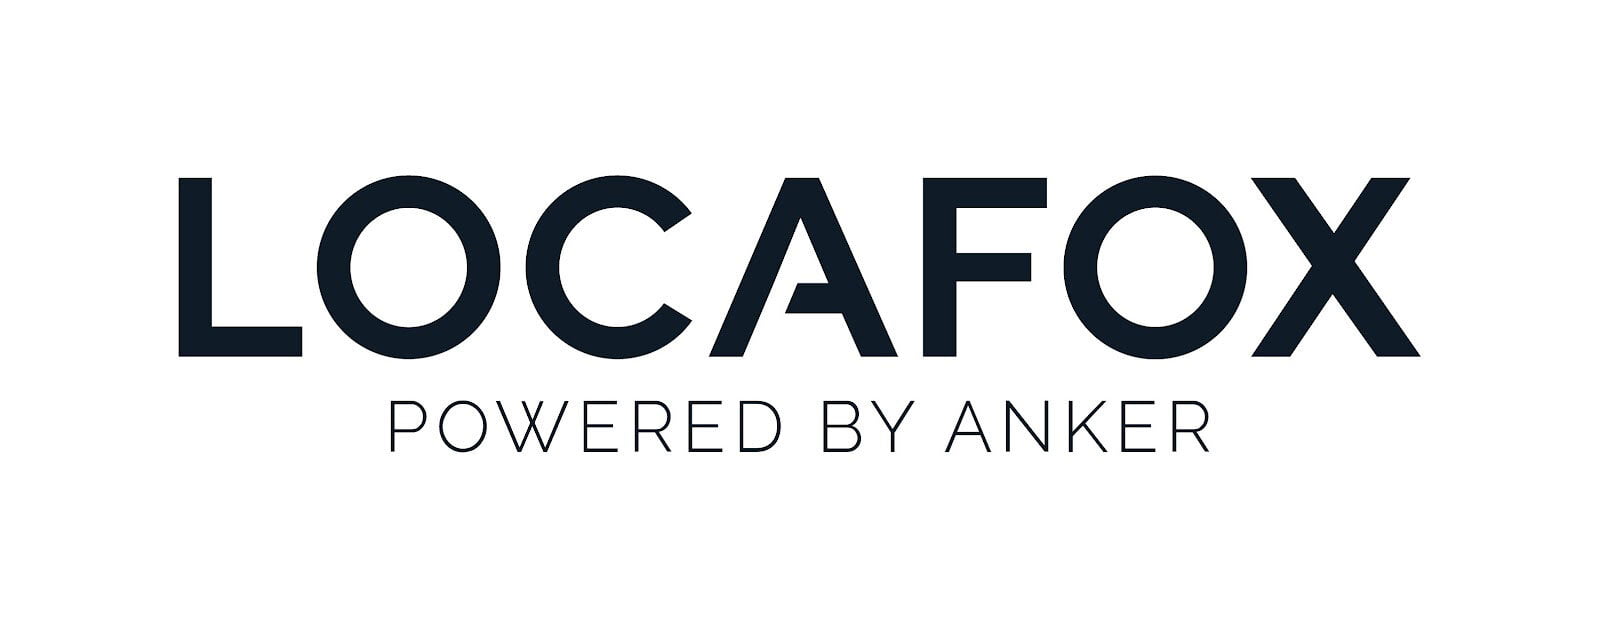 Locafox by Anker Logo